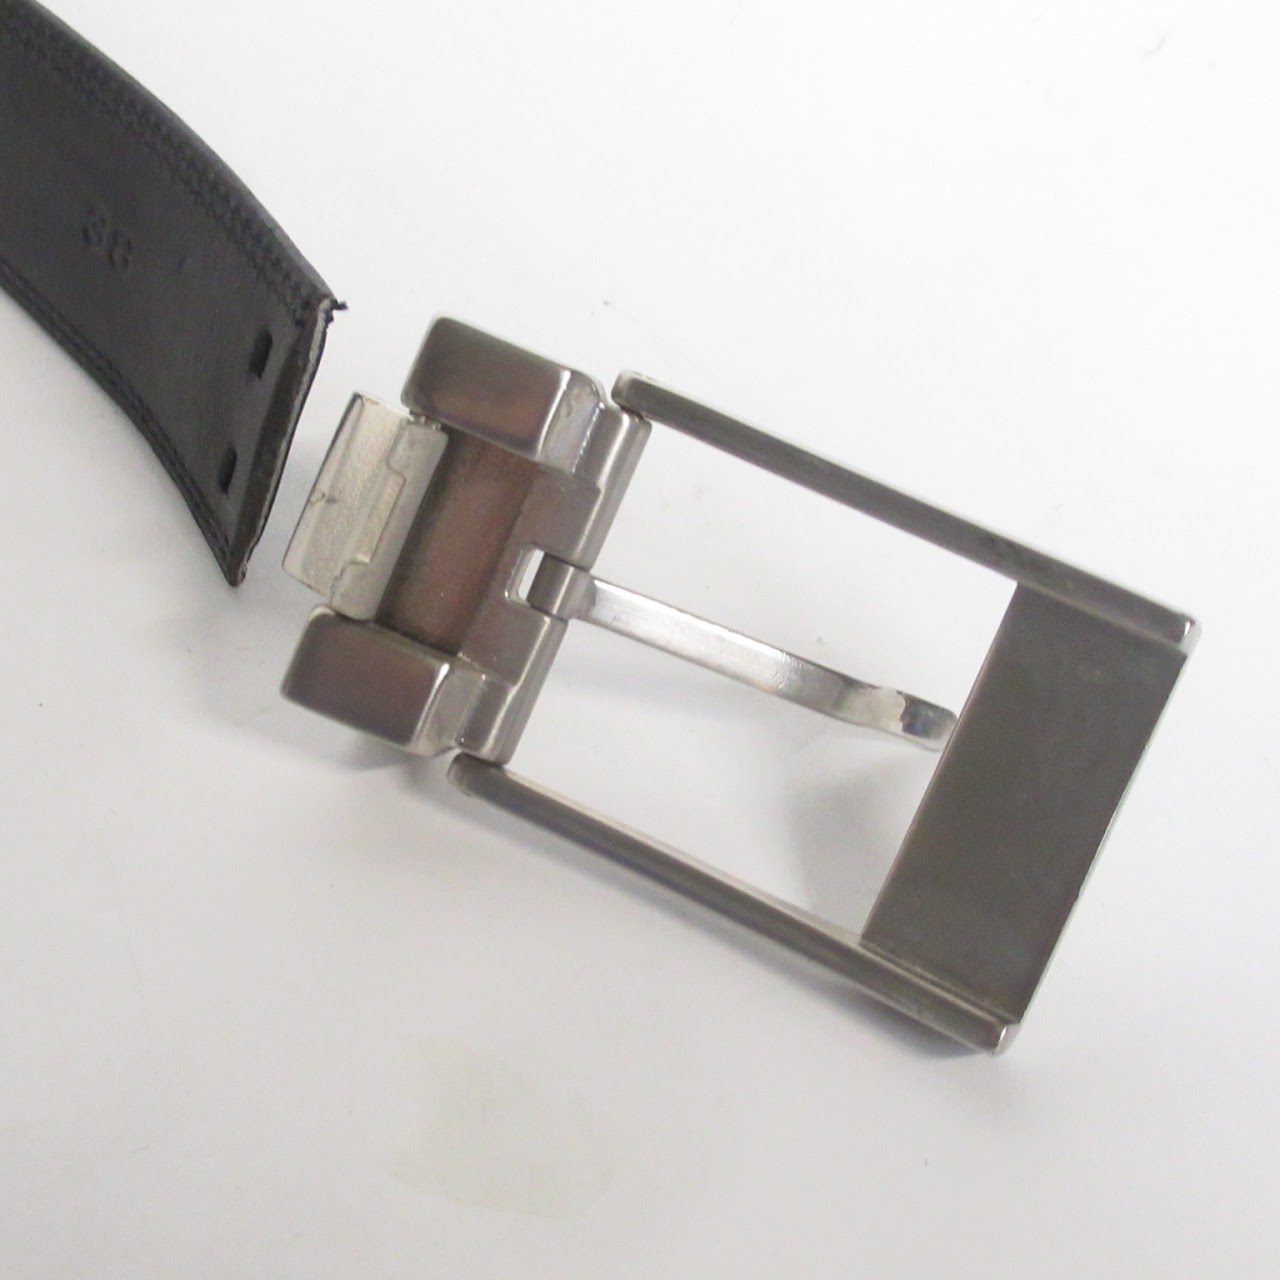 Salvatore Ferragamo Leather Belt